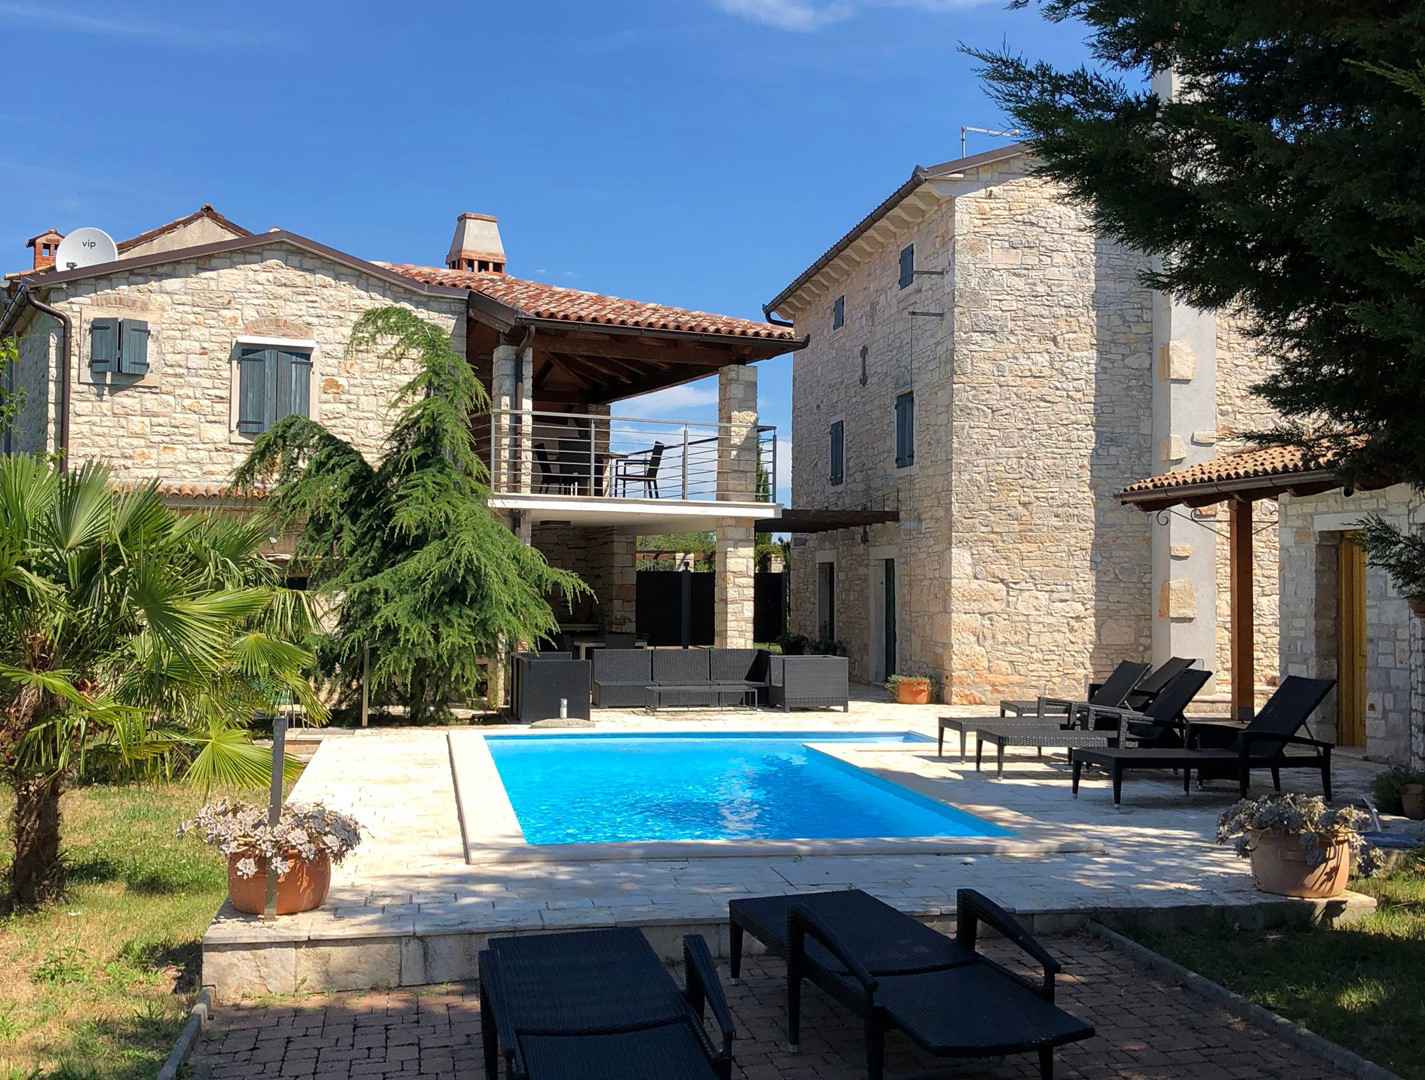 Villa mit Pool Ferienhaus in Kroatien